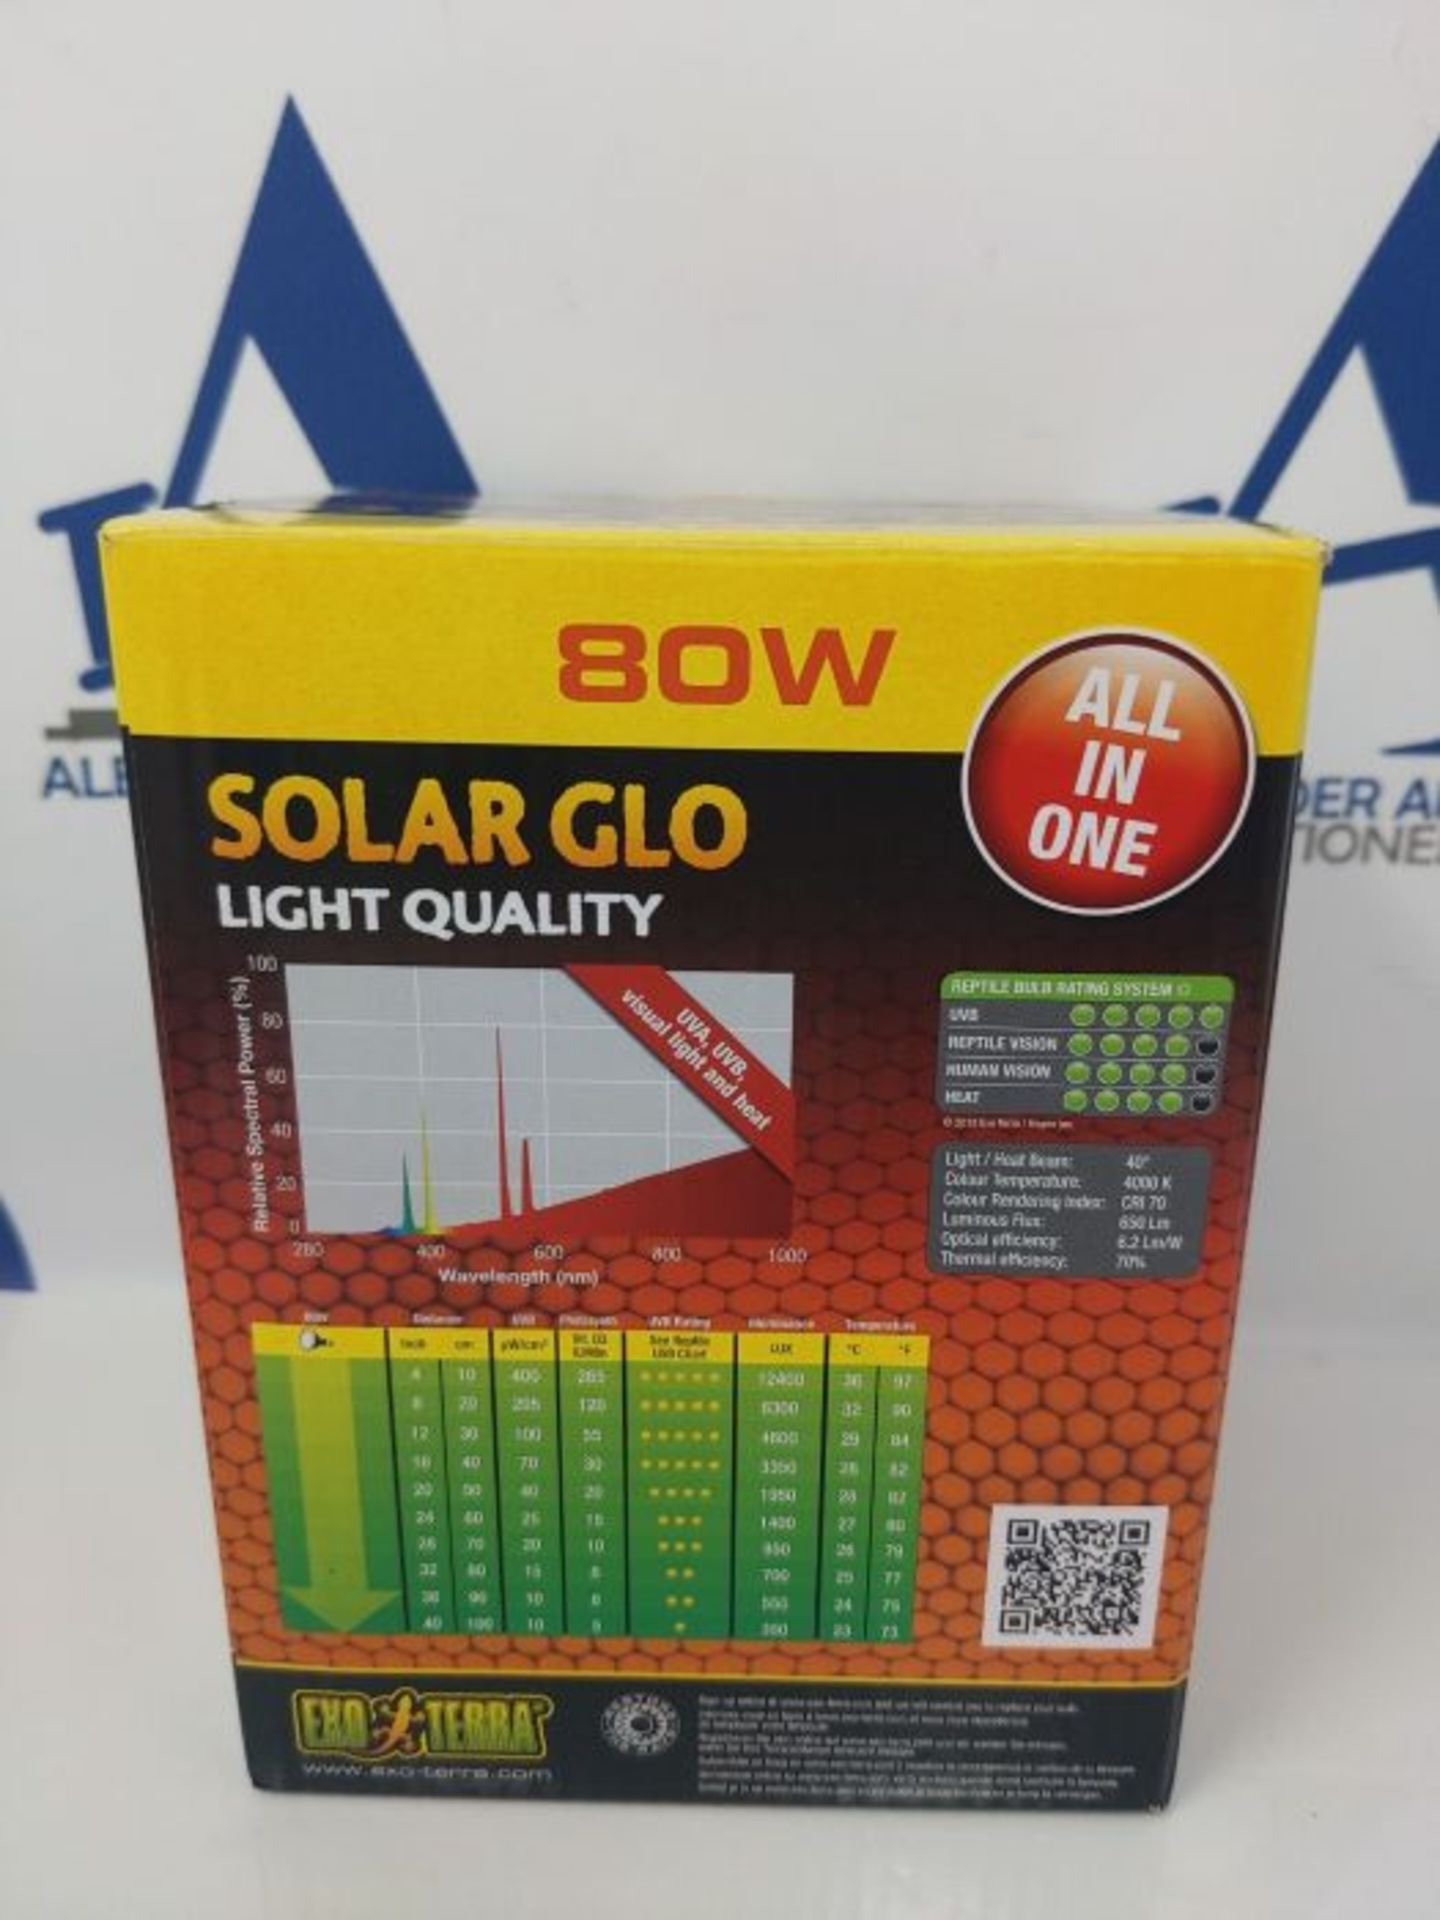 Exo Terra Solar Glo Sun Simulating Lamp, 80 W - Image 2 of 3